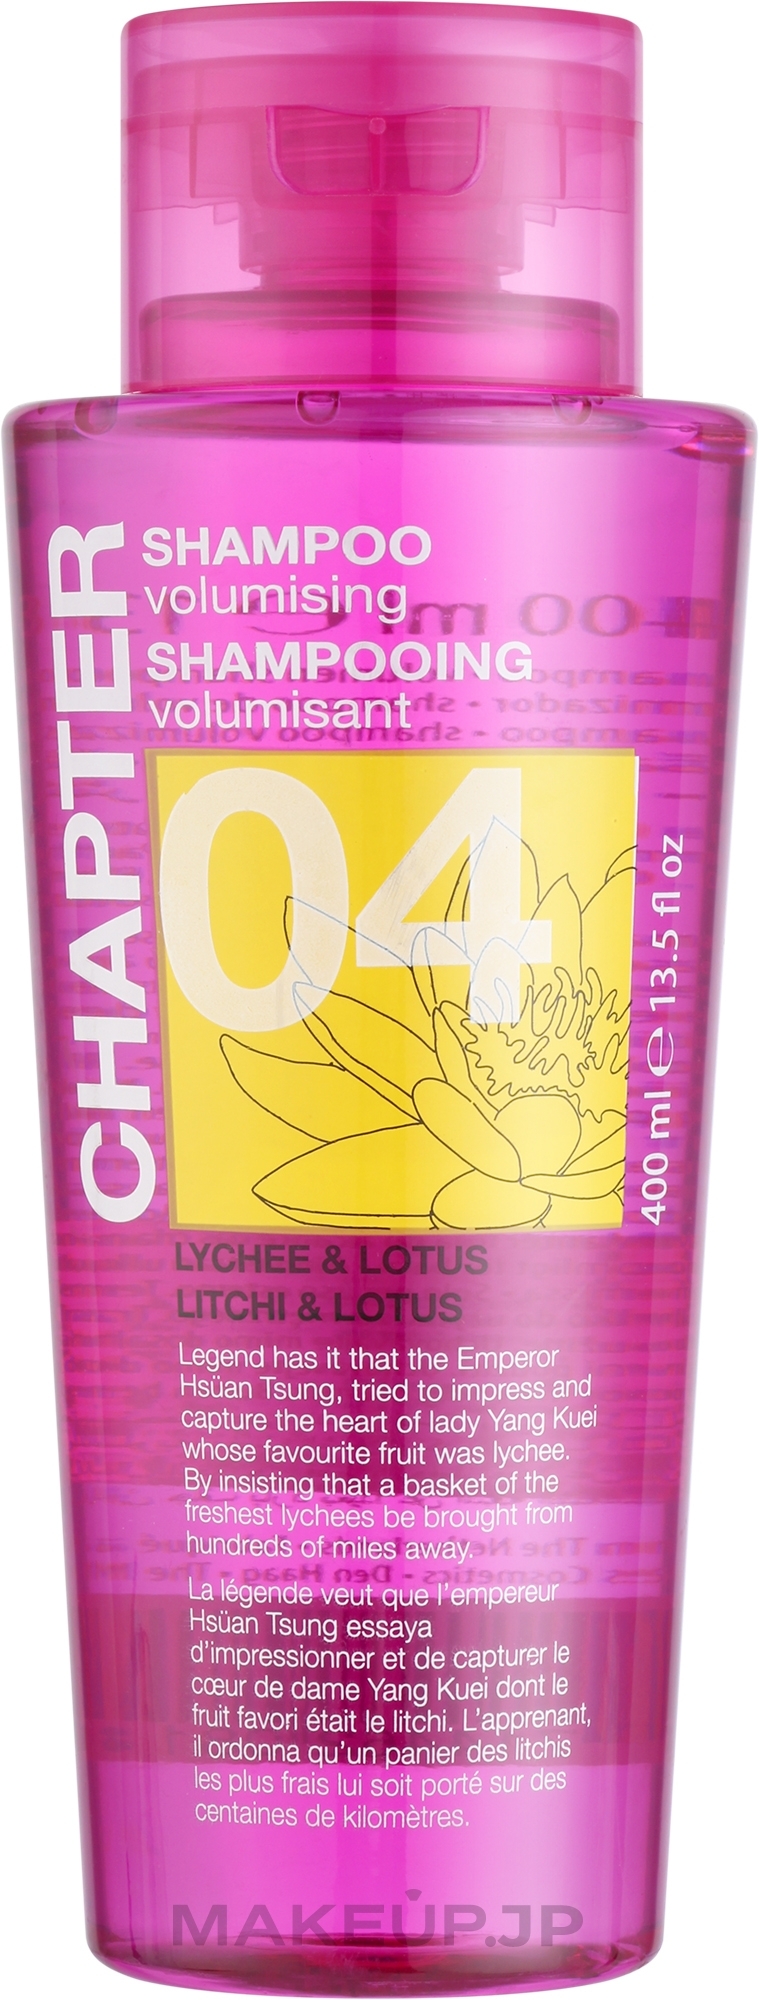 Lychee & Lotus Shampoo - Mades Cosmetics Chapter 04 Lychee & Lotus Shampoo — photo 400 ml